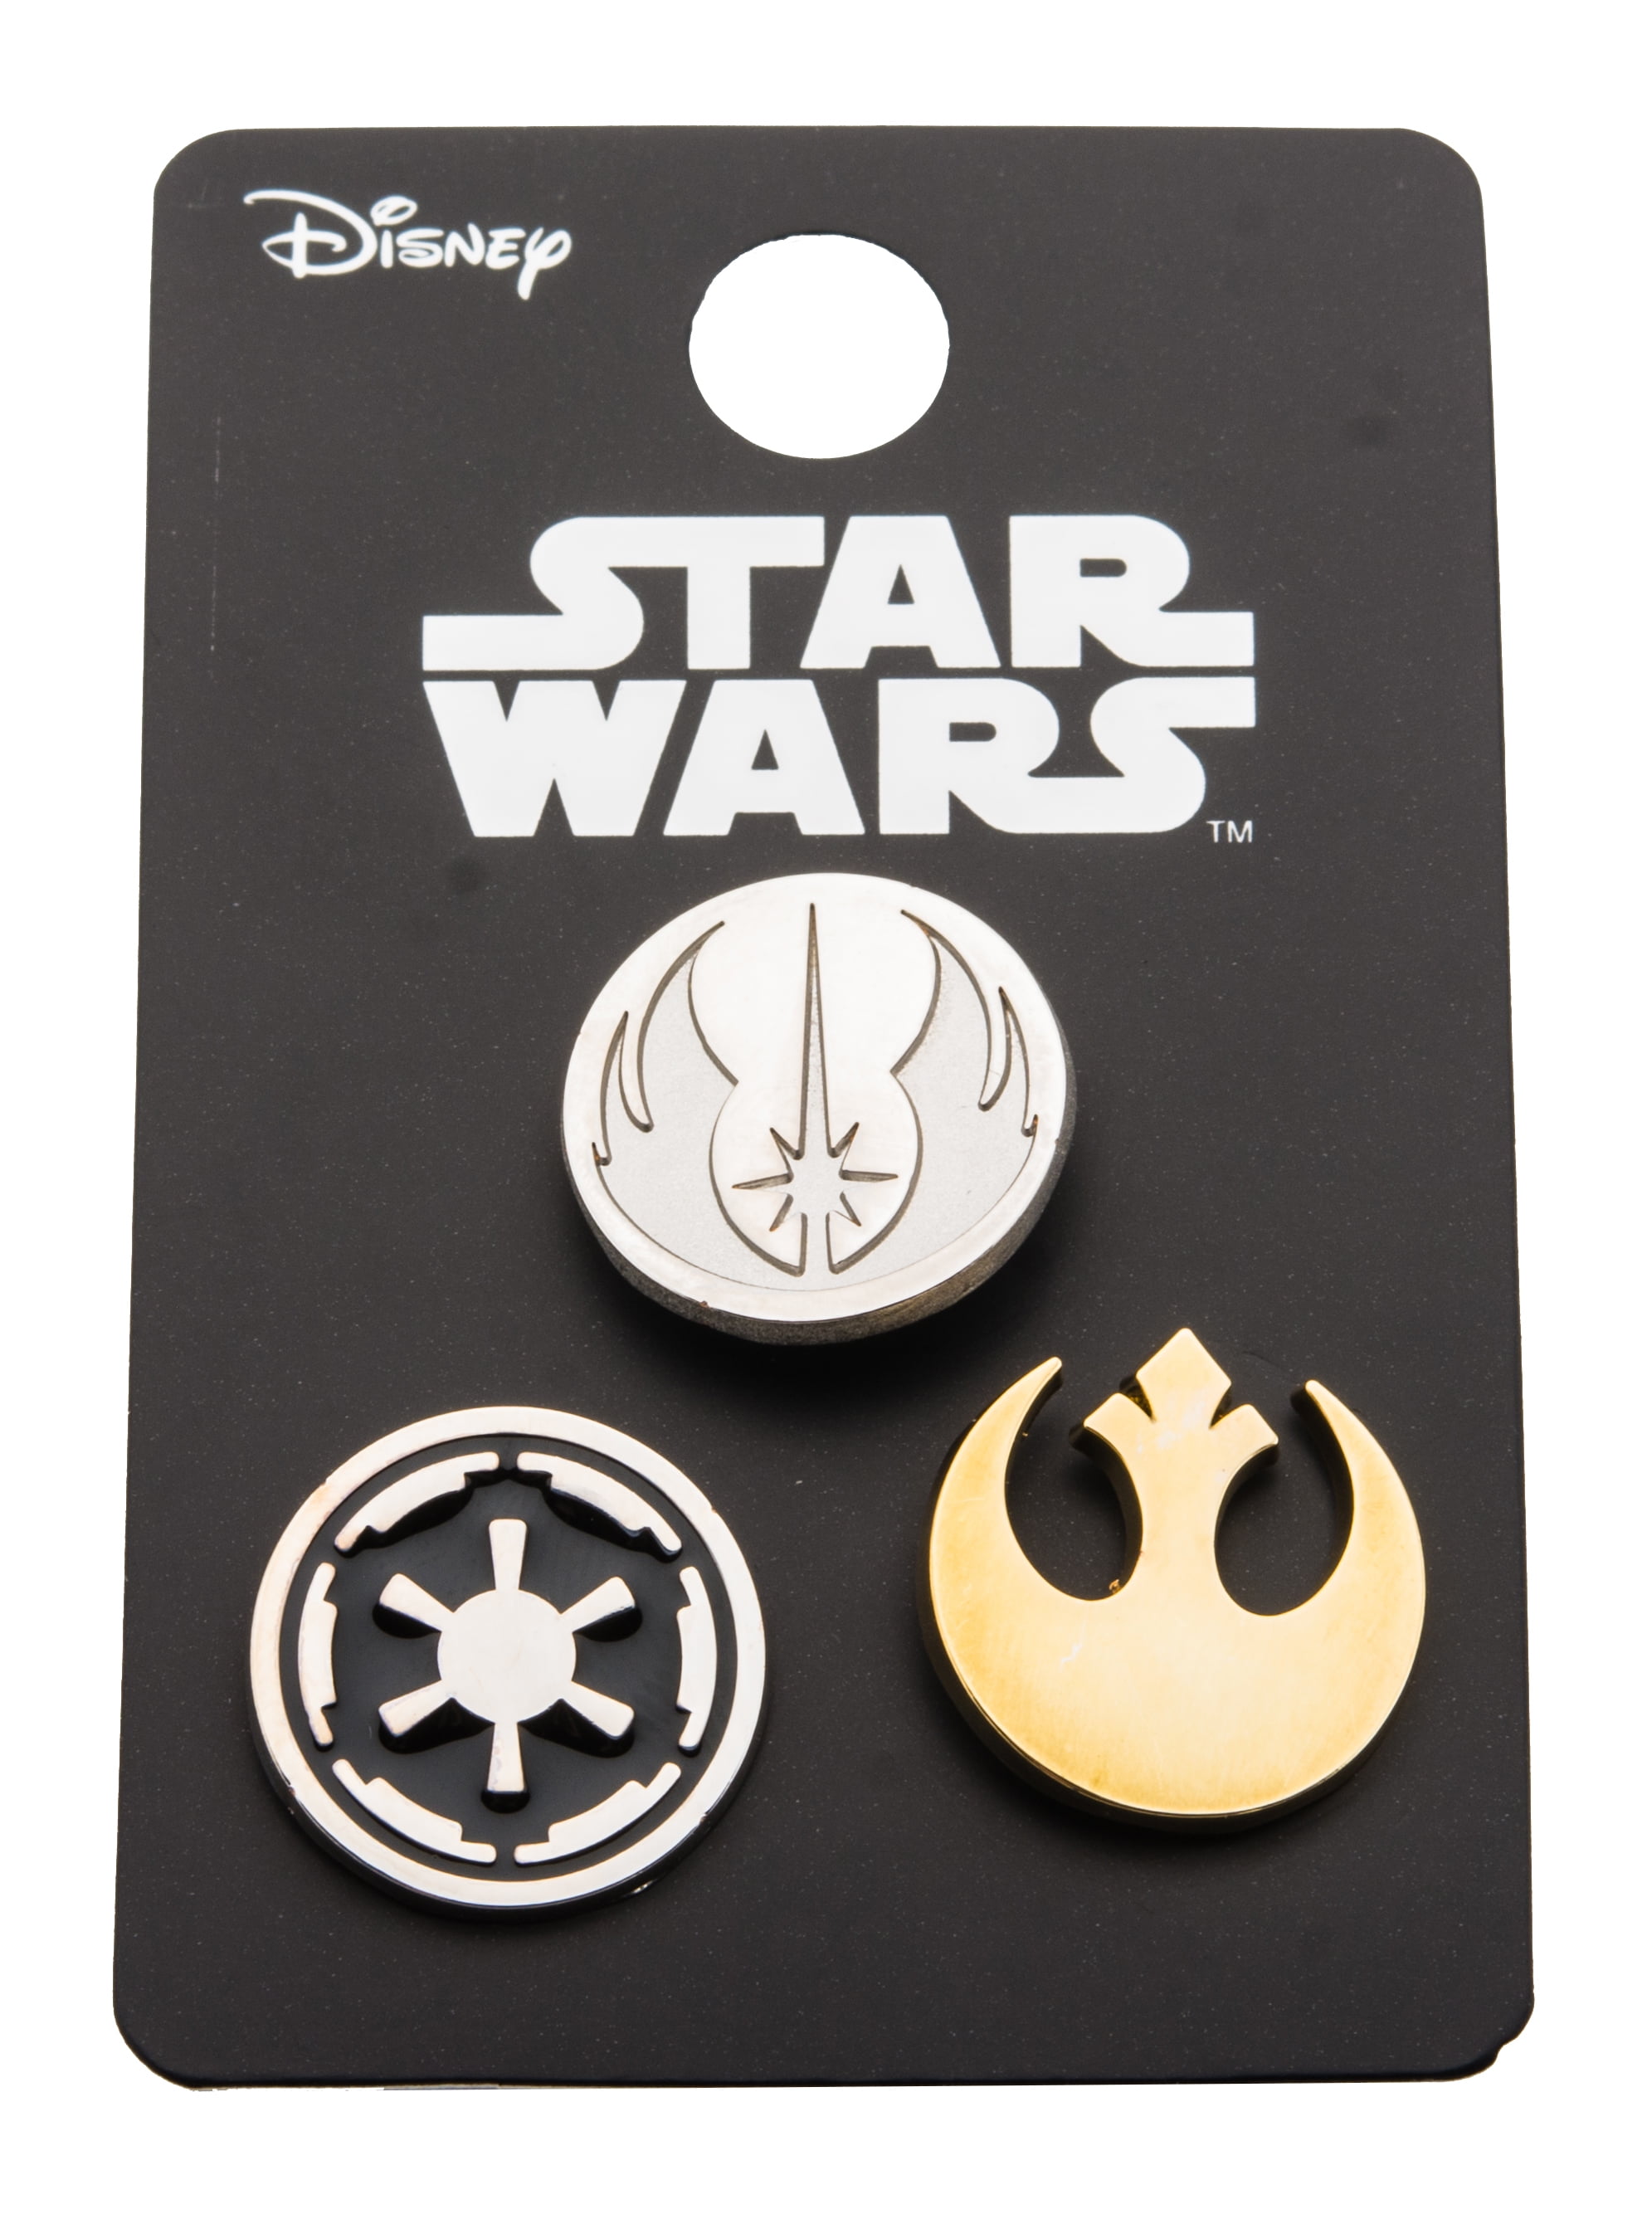 Star Wars Galactic Rebel Alliance Lapel Pin 